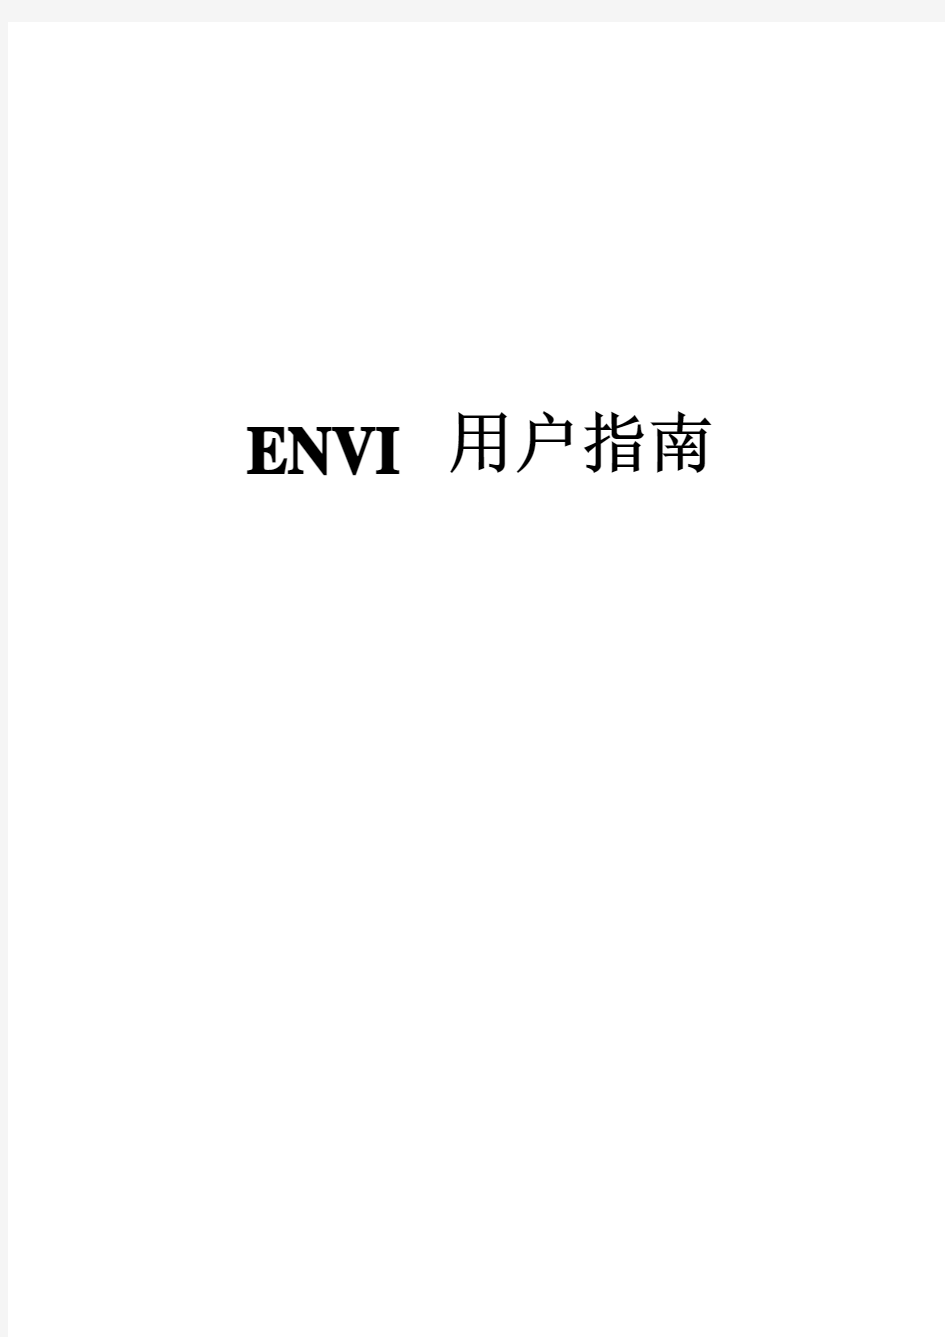 ENVI 用户指南